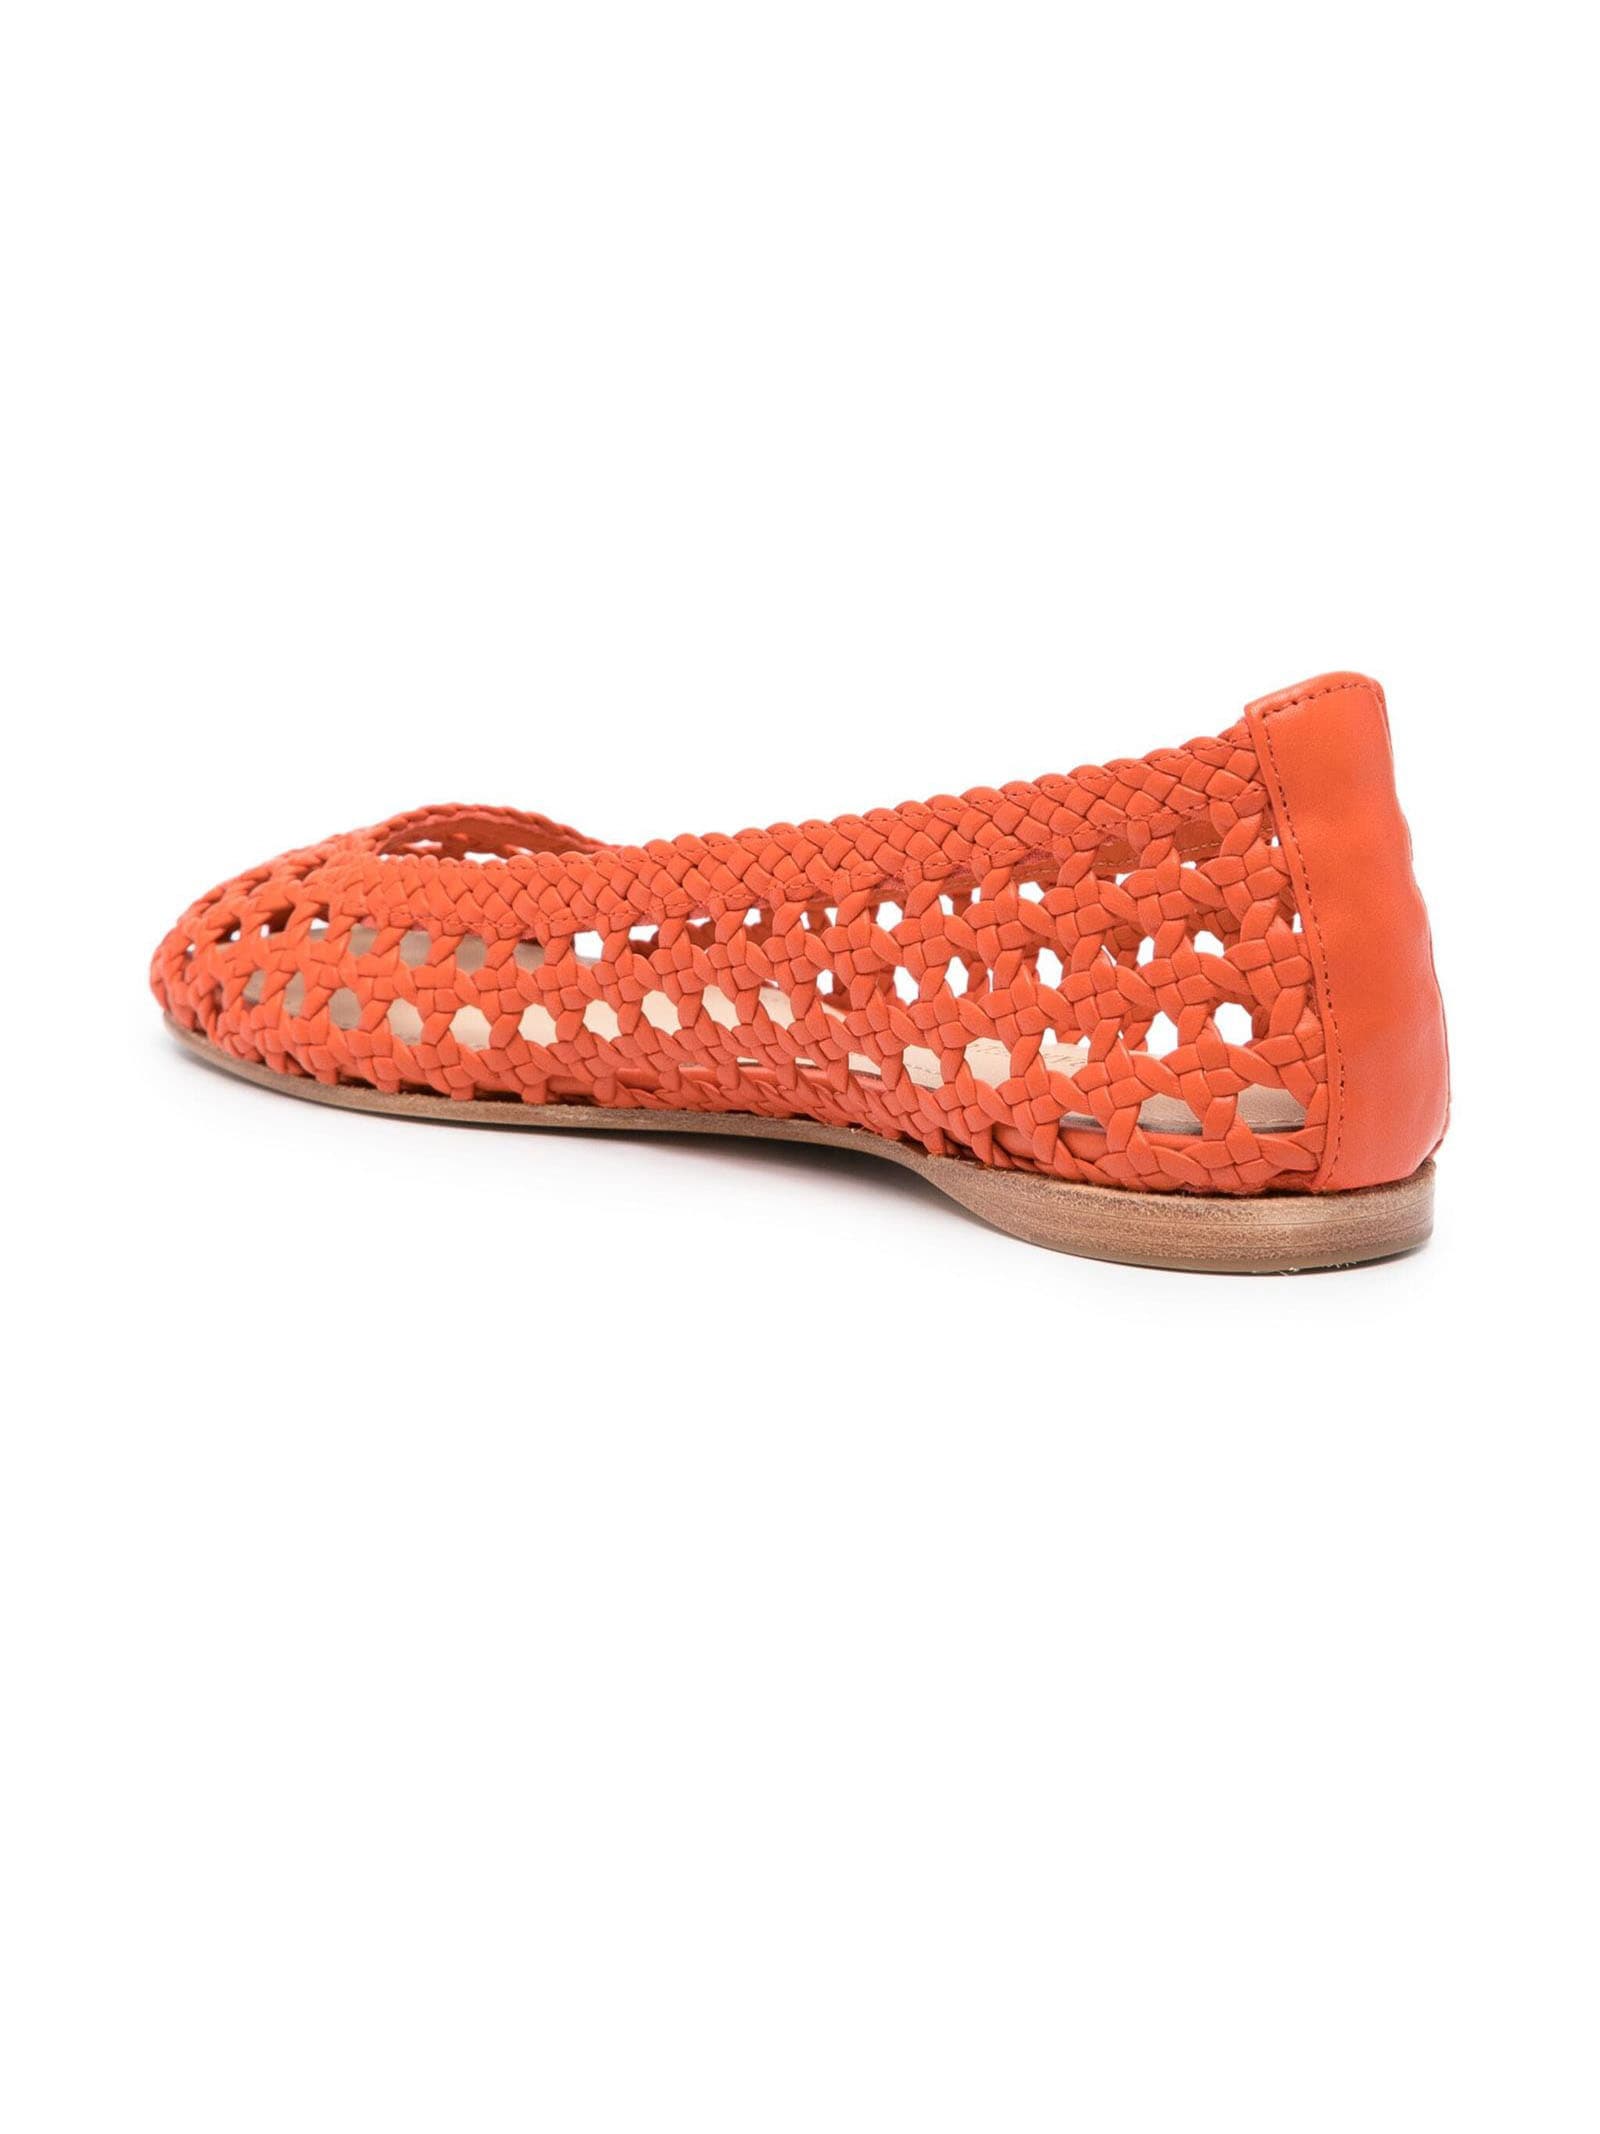 Shop Paloma Barceló Orange Calf Leather Ballerina Shoes